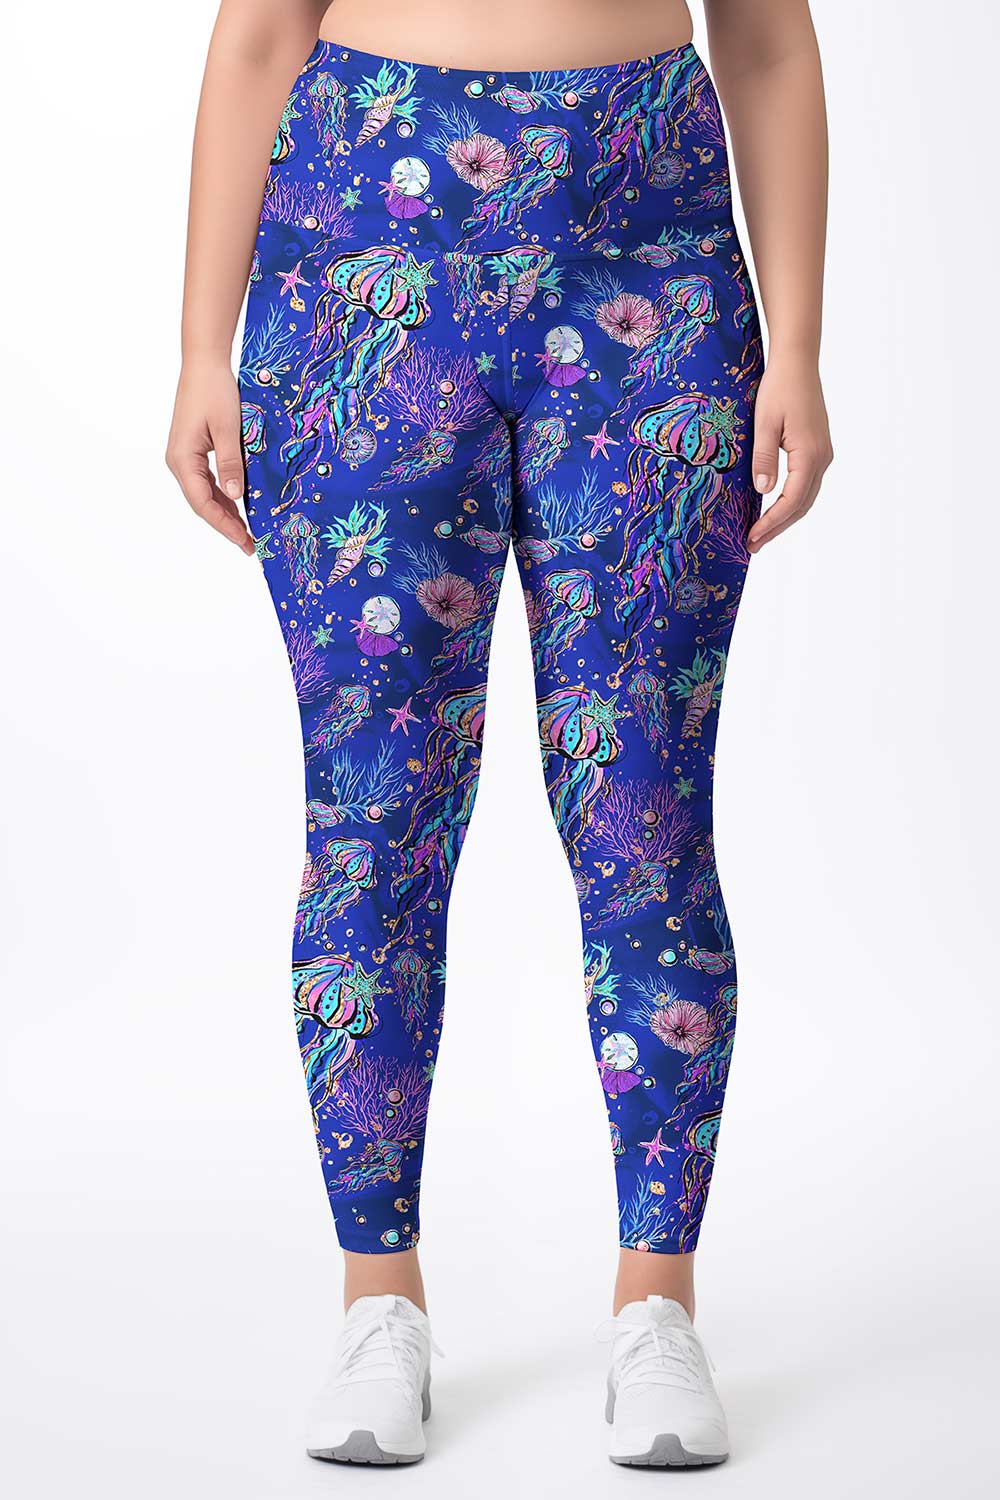 Image of Jellyfish Lucy Blue Sea Life Print Leggings Yoga Pants - Women